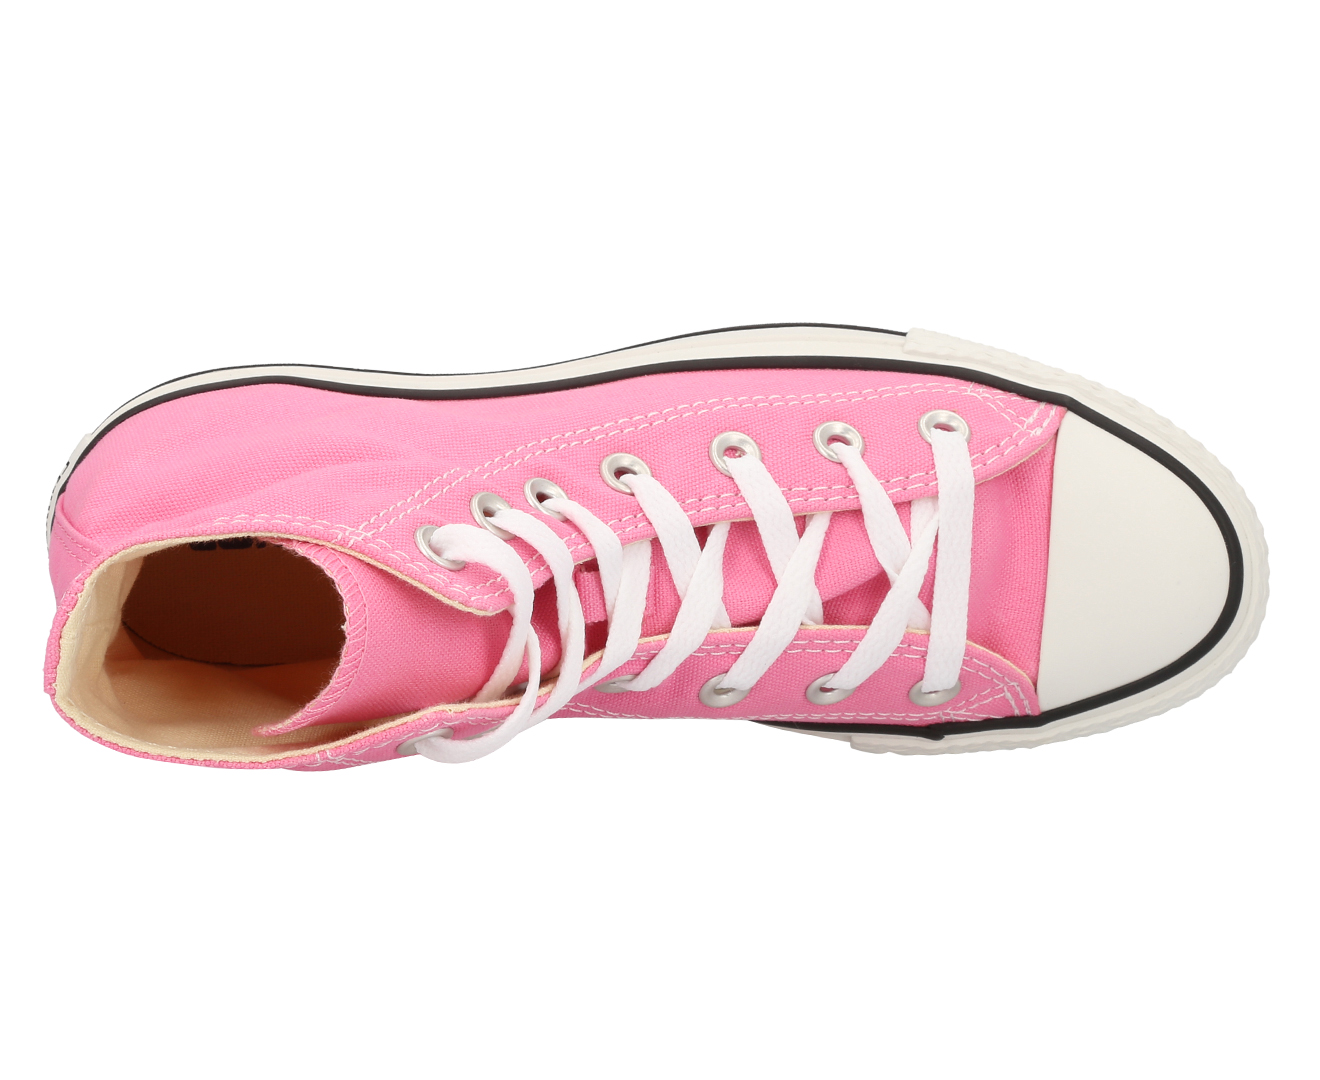 Converse Chuck Taylor All Star High Top Shoe - Pink Hi | Catch.co.nz